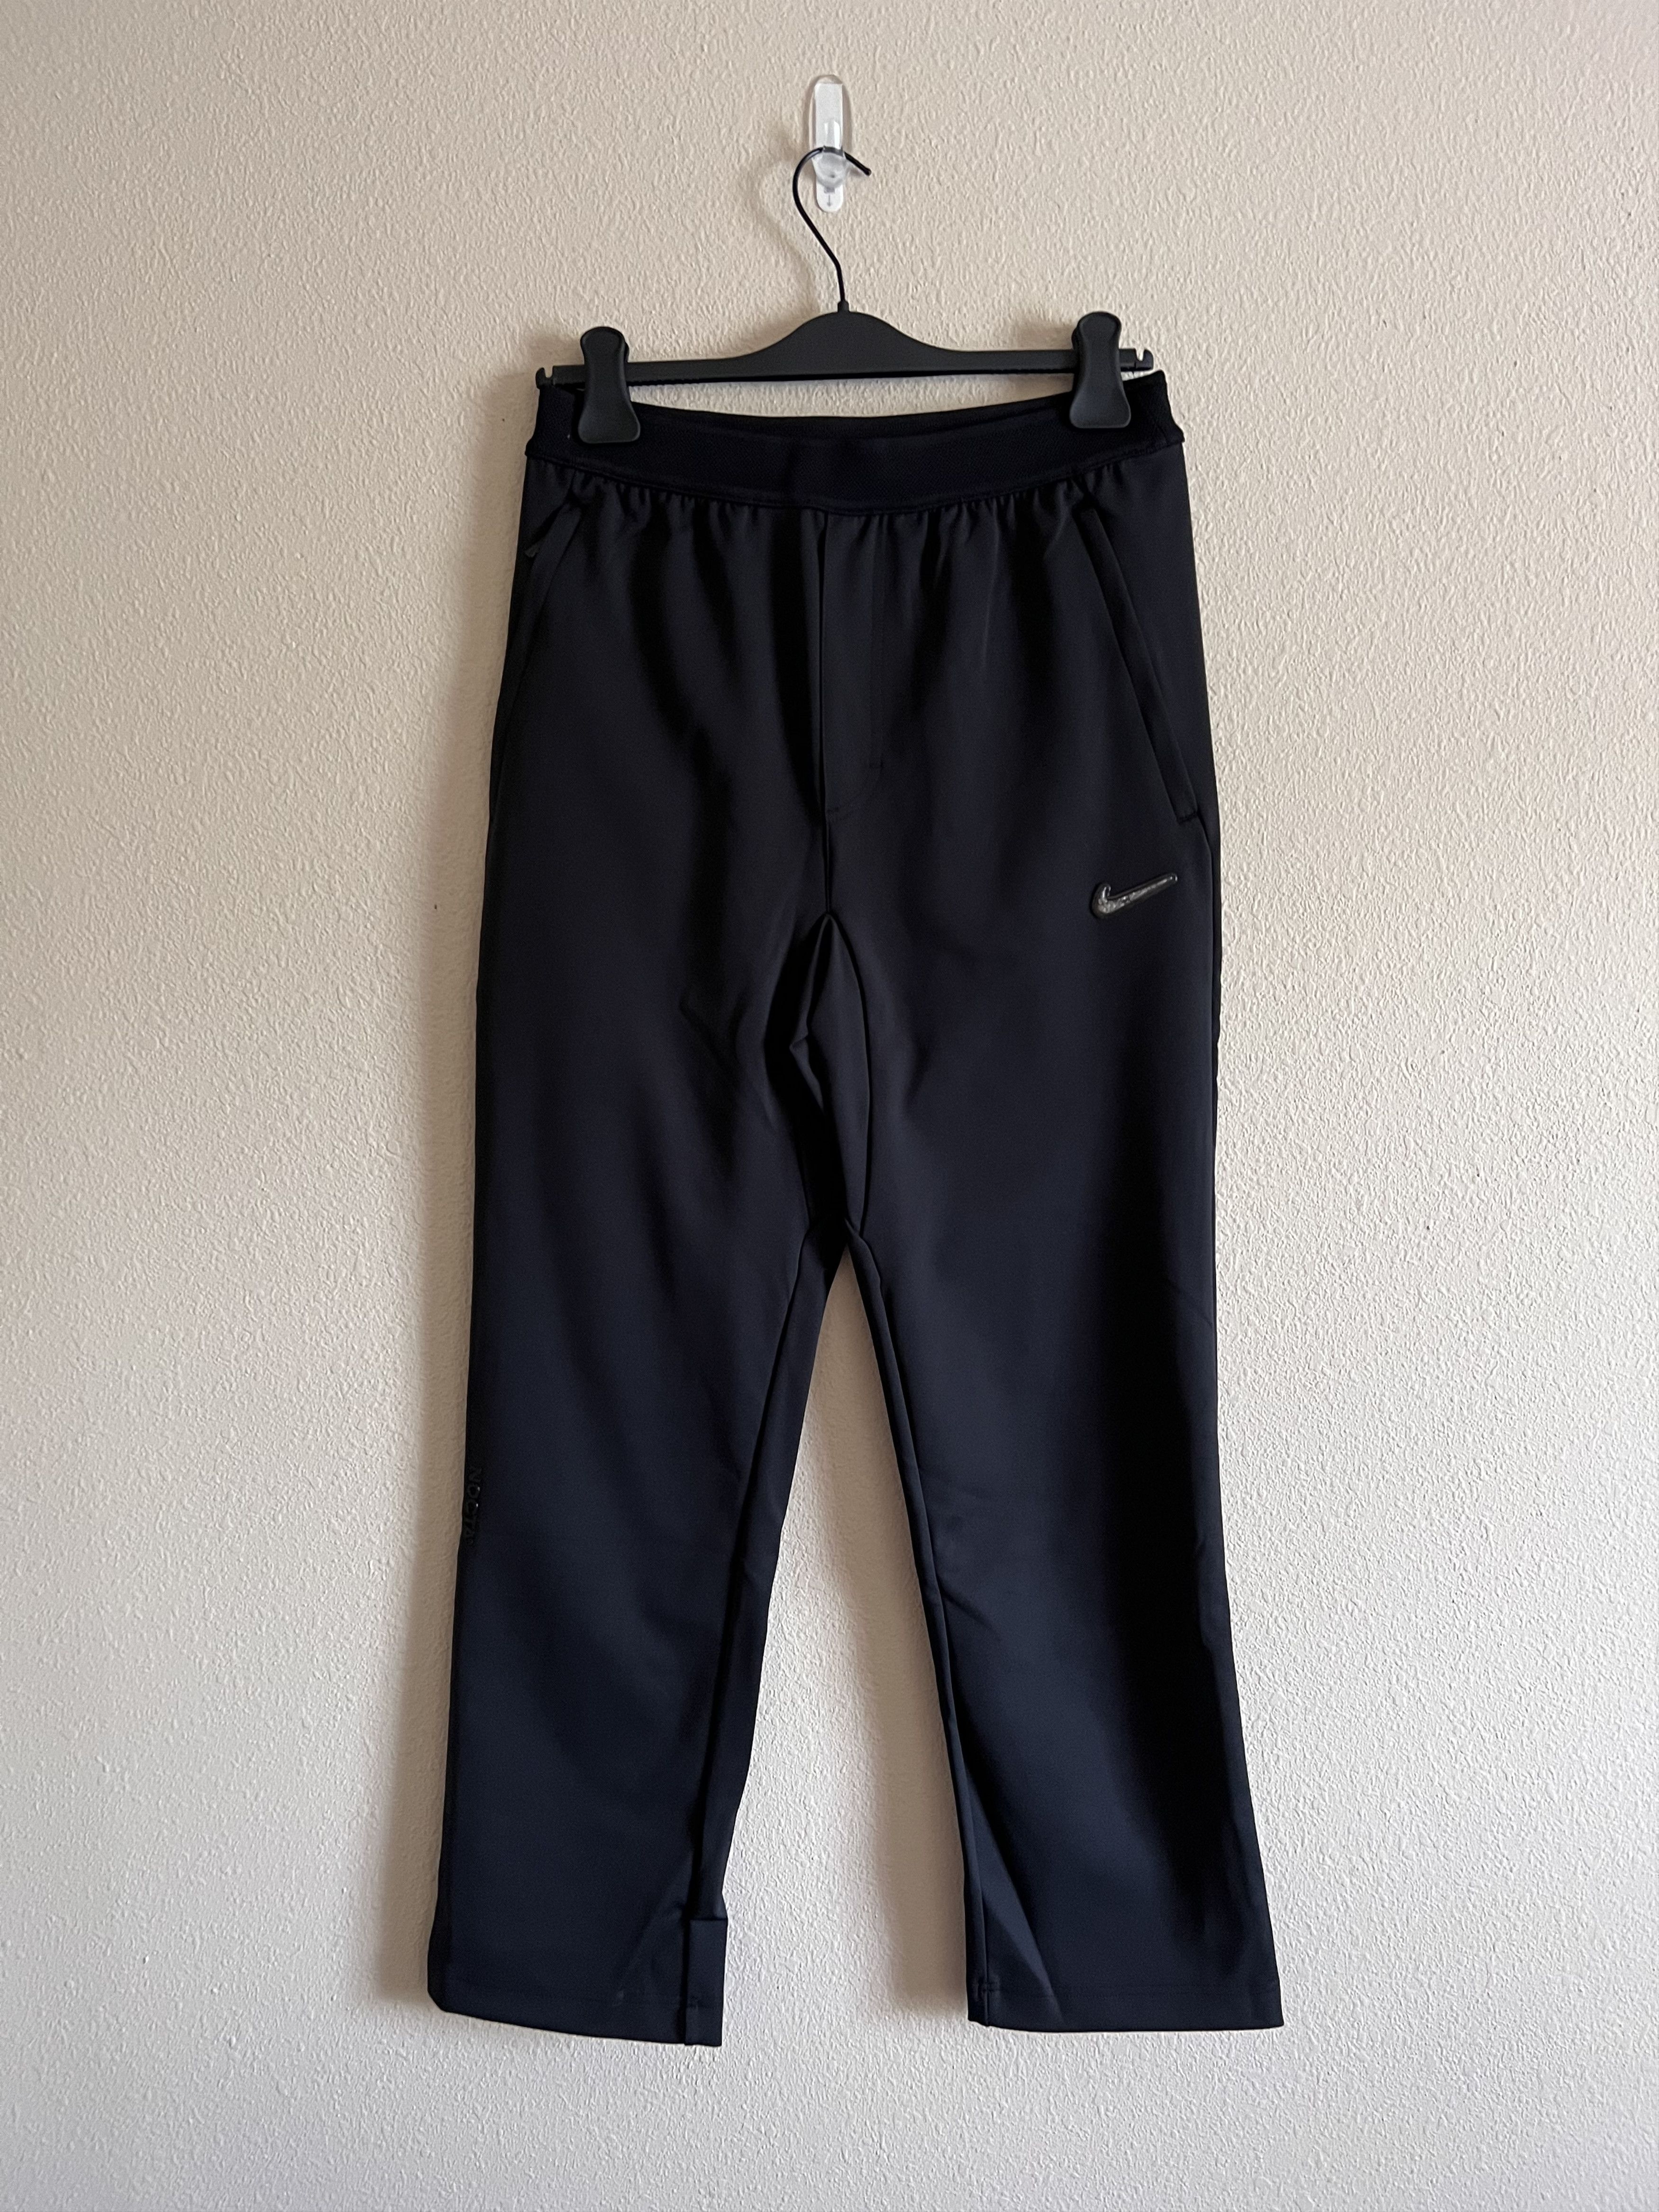 Nike Nike NOCTA Swarovski Crystal Swoosh Pants in Black | Grailed